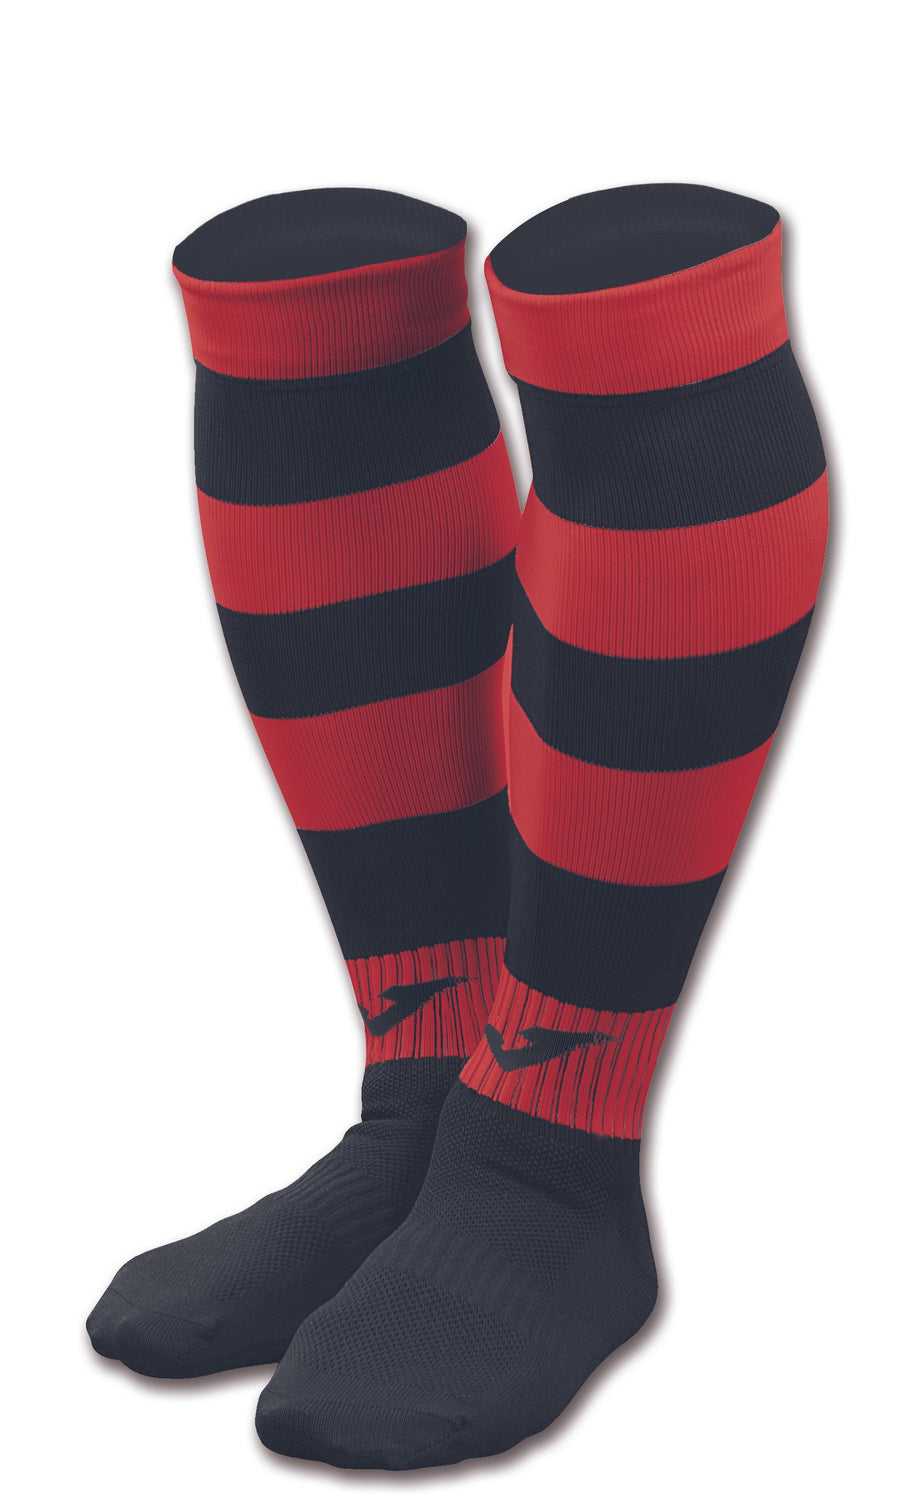 Club Socks | Portlaw United FC | Alfie Hale Sports